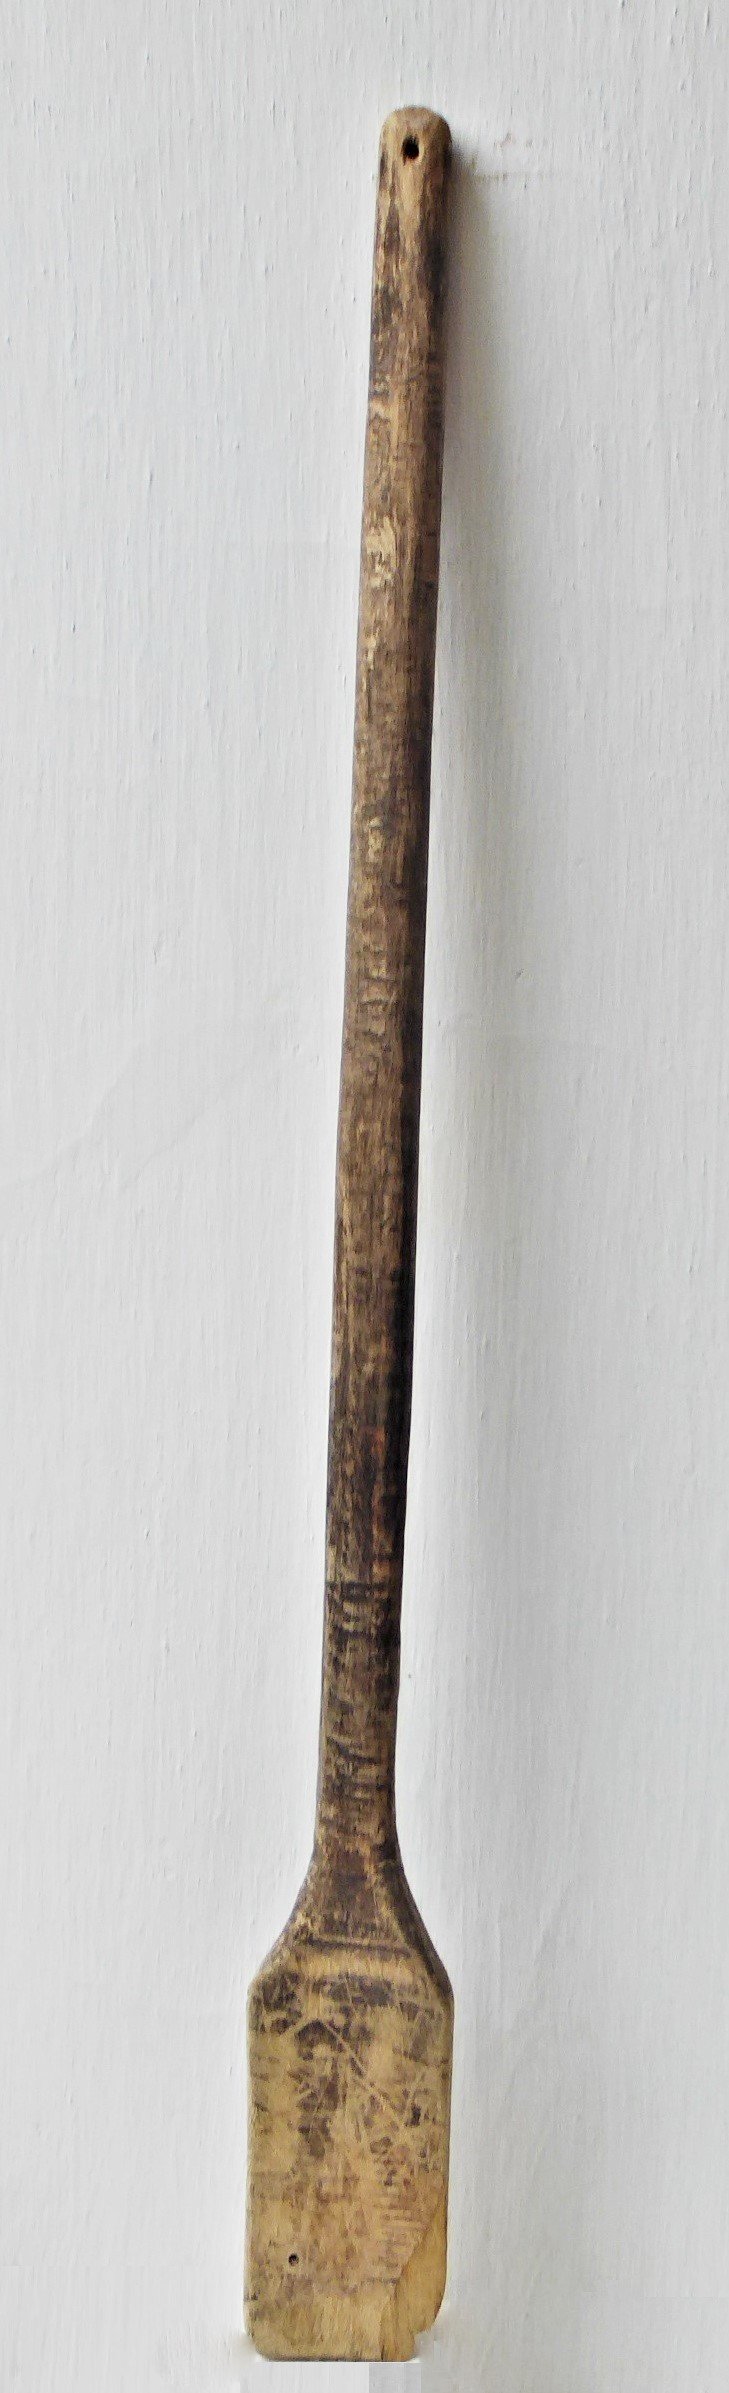 Zsírsütő kanál (Tapolcai Városi Múzeum CC BY-NC-SA)